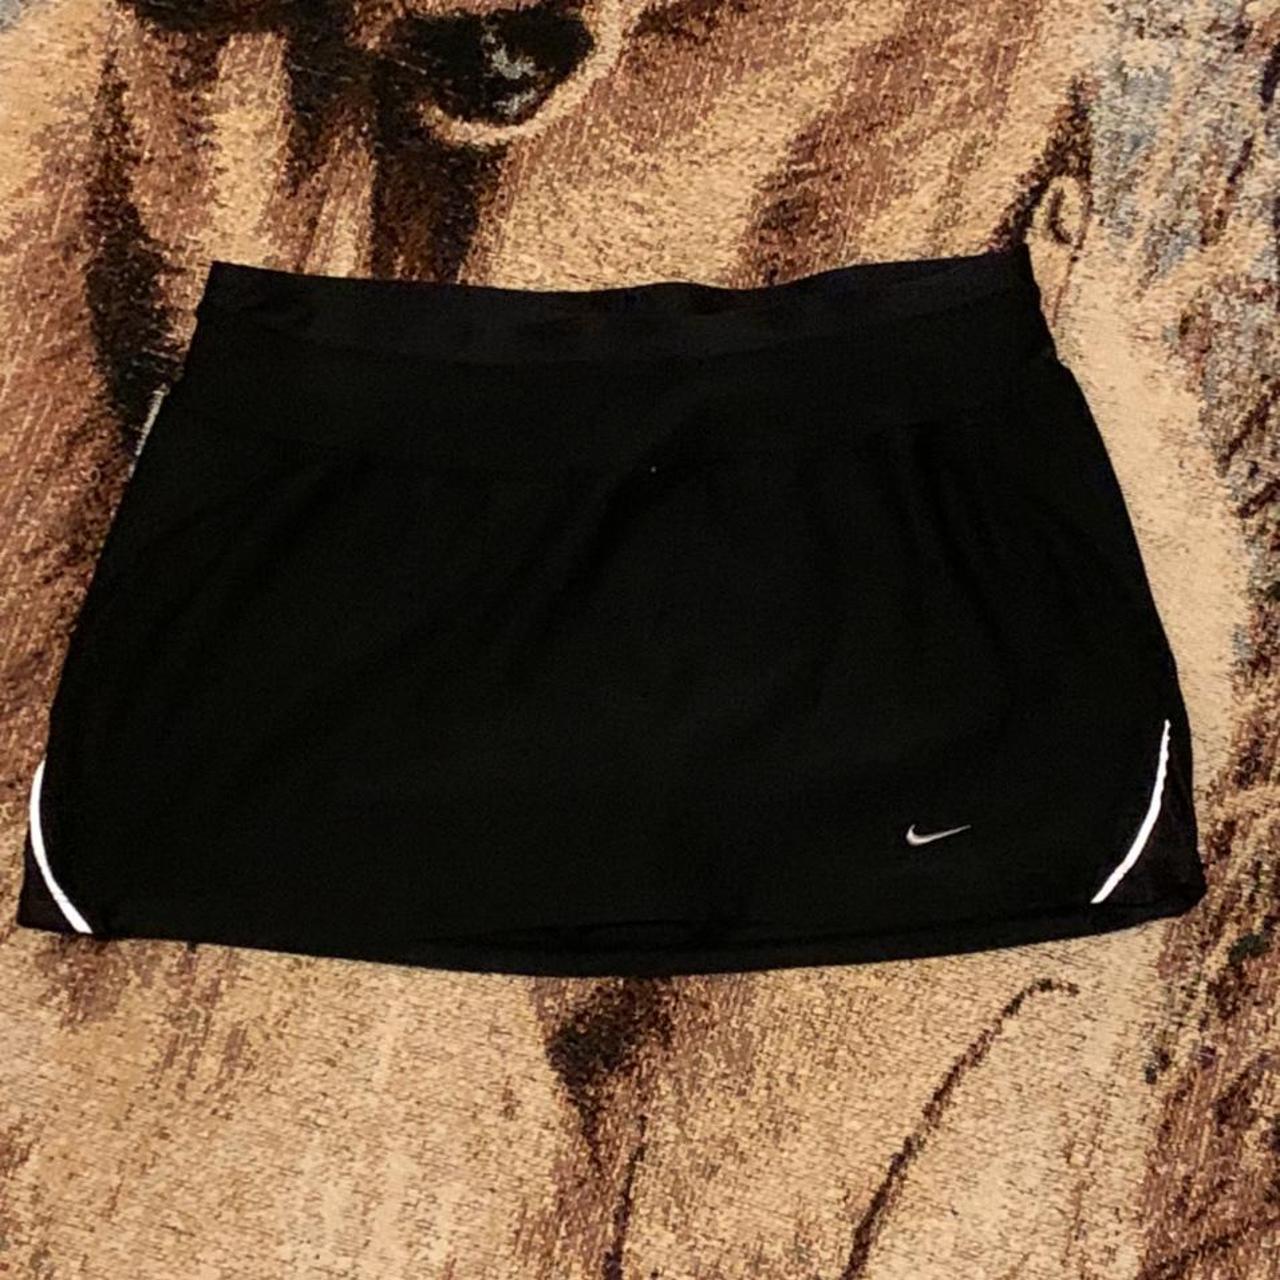 Nike Women's Black and Silver Skirt